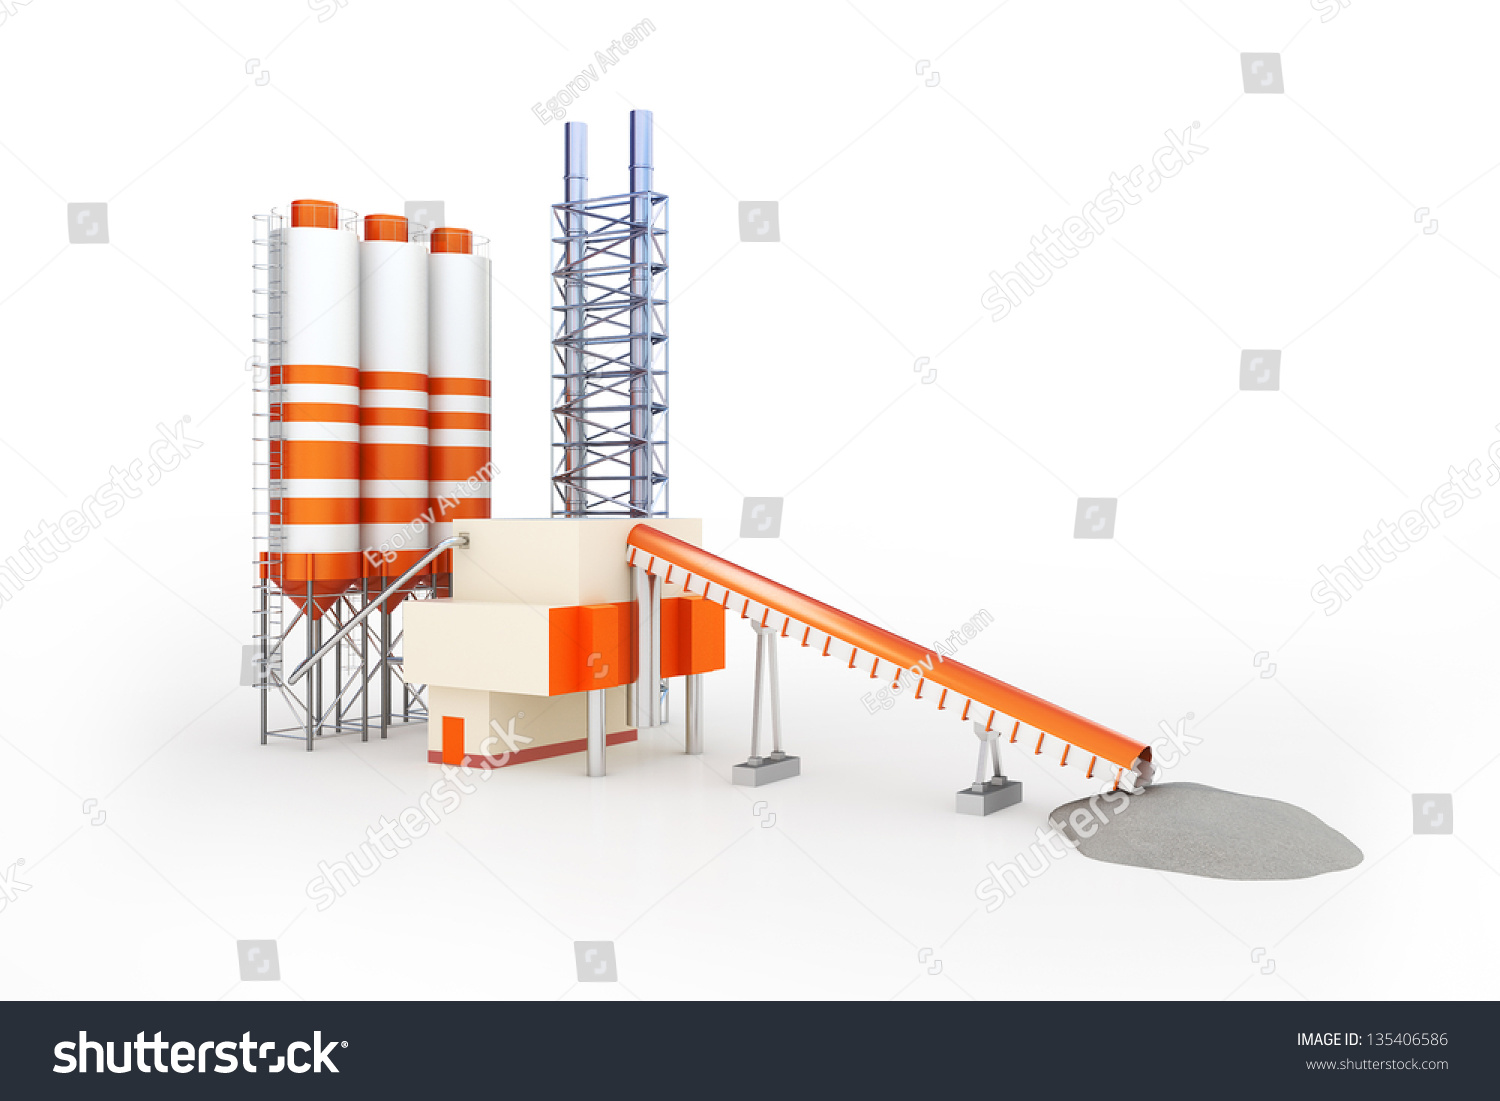 3d Model Of Cement Factory Stock Photo 135406586 : Shutterstock